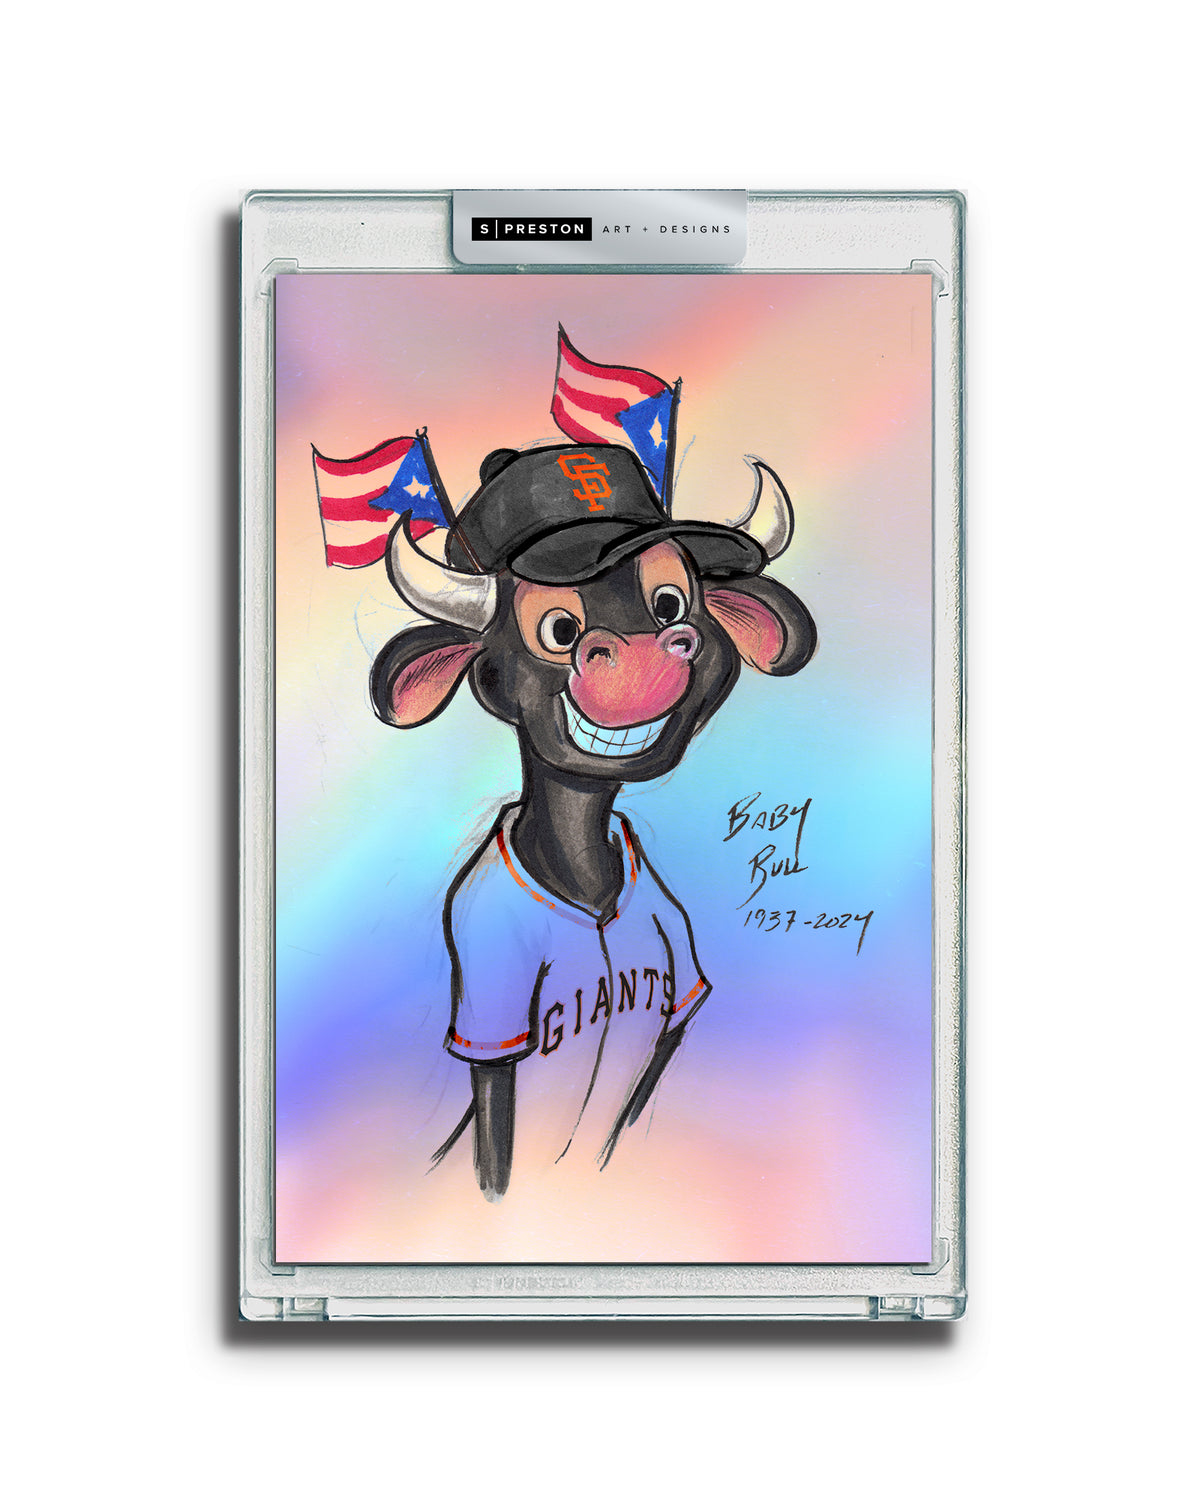 RIP Baby Bull Limited Edition Art Slab